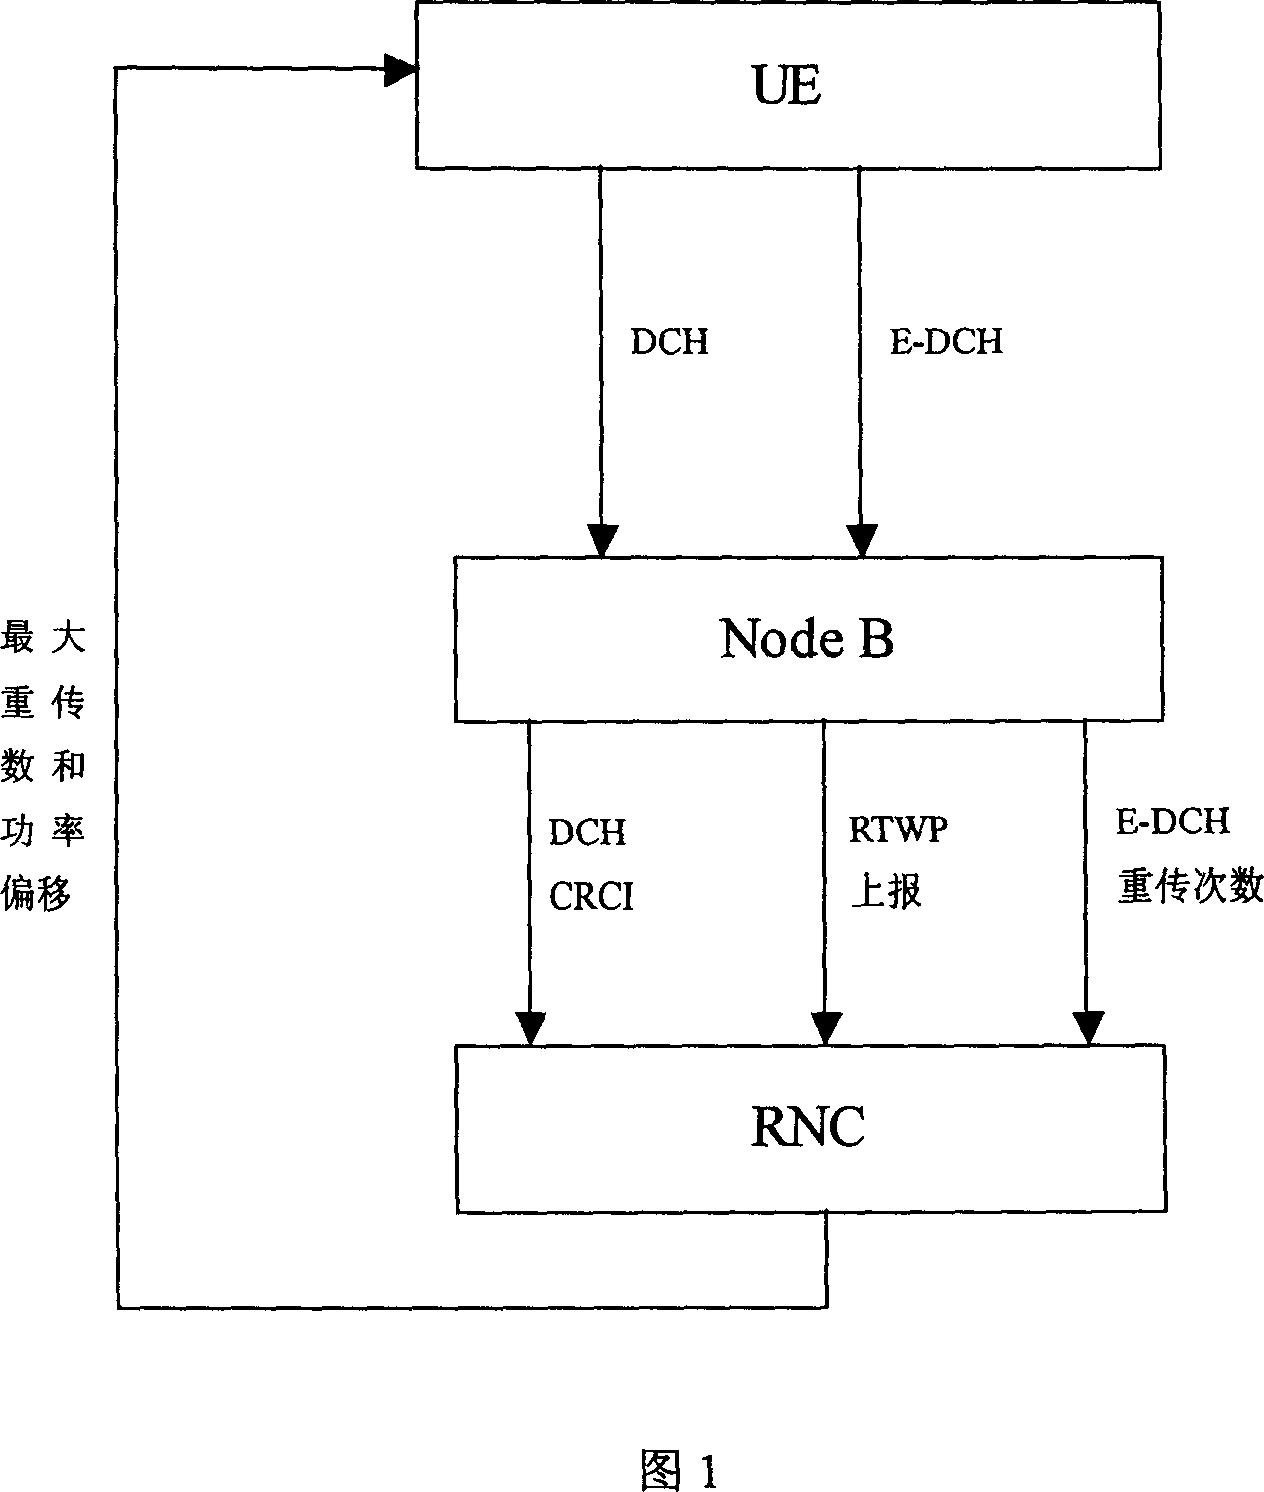 Method for realizing HSUPA external ring power control